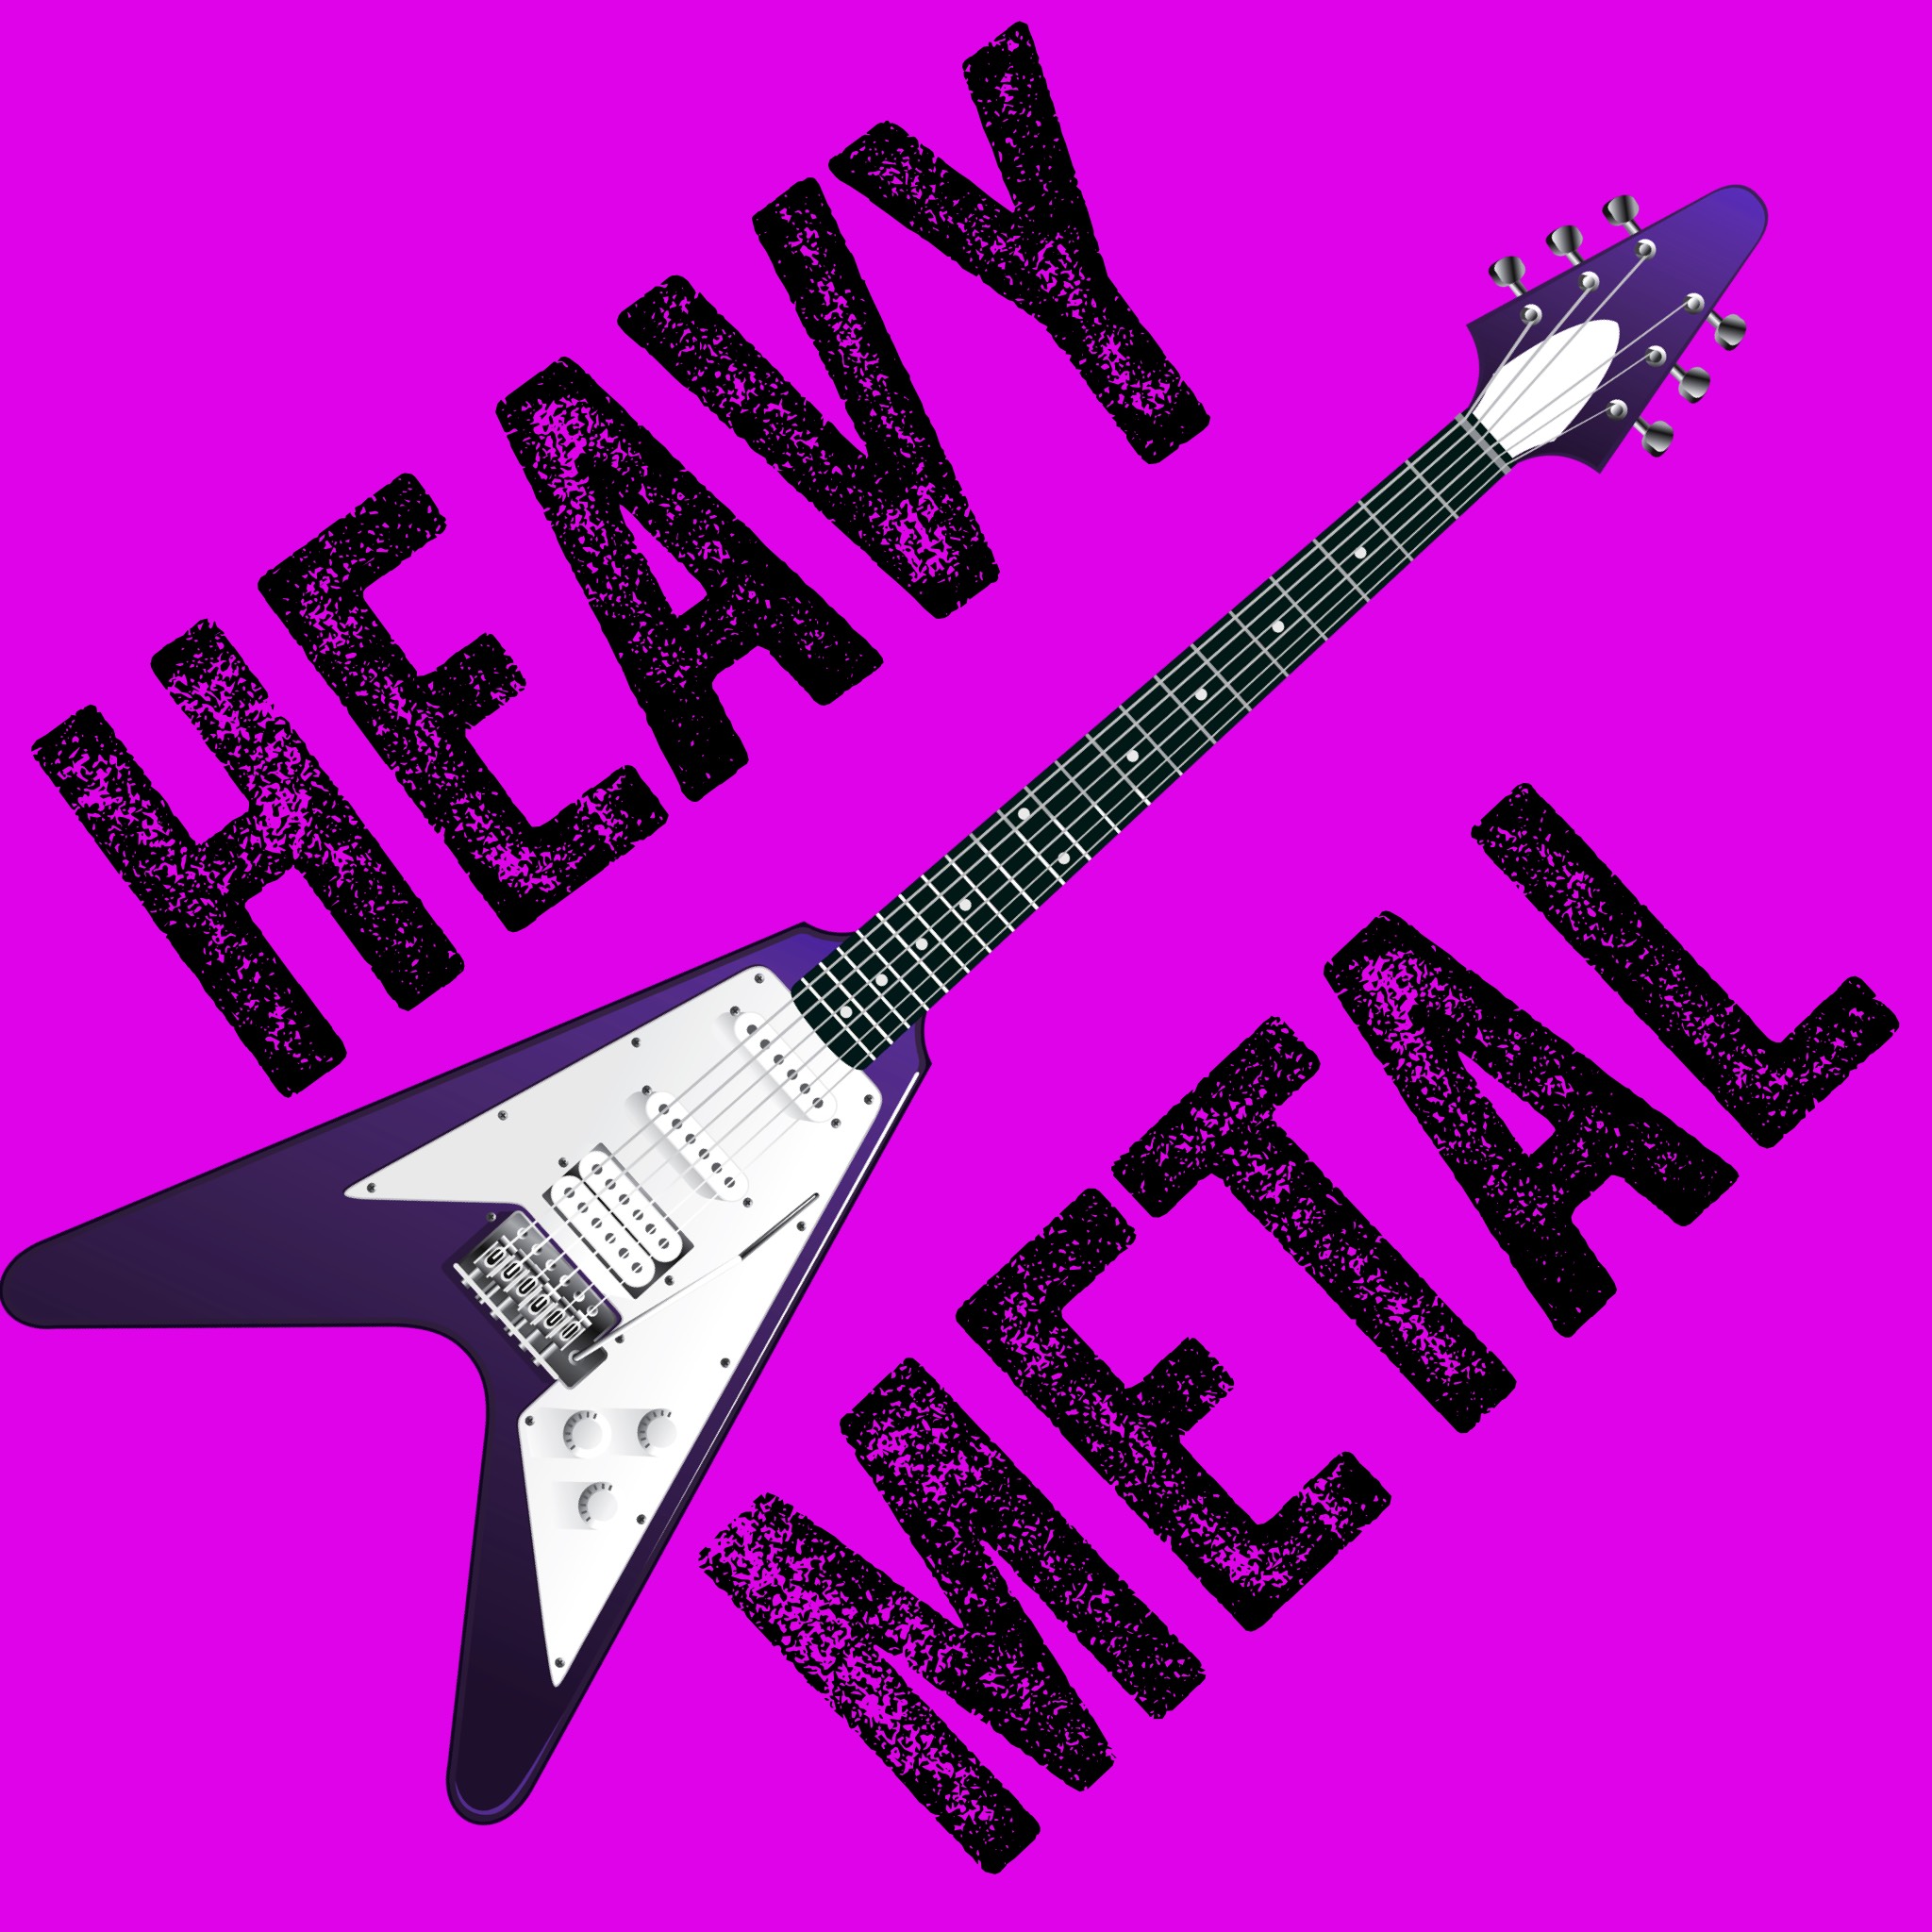 Art for Metalheads by Metalheads